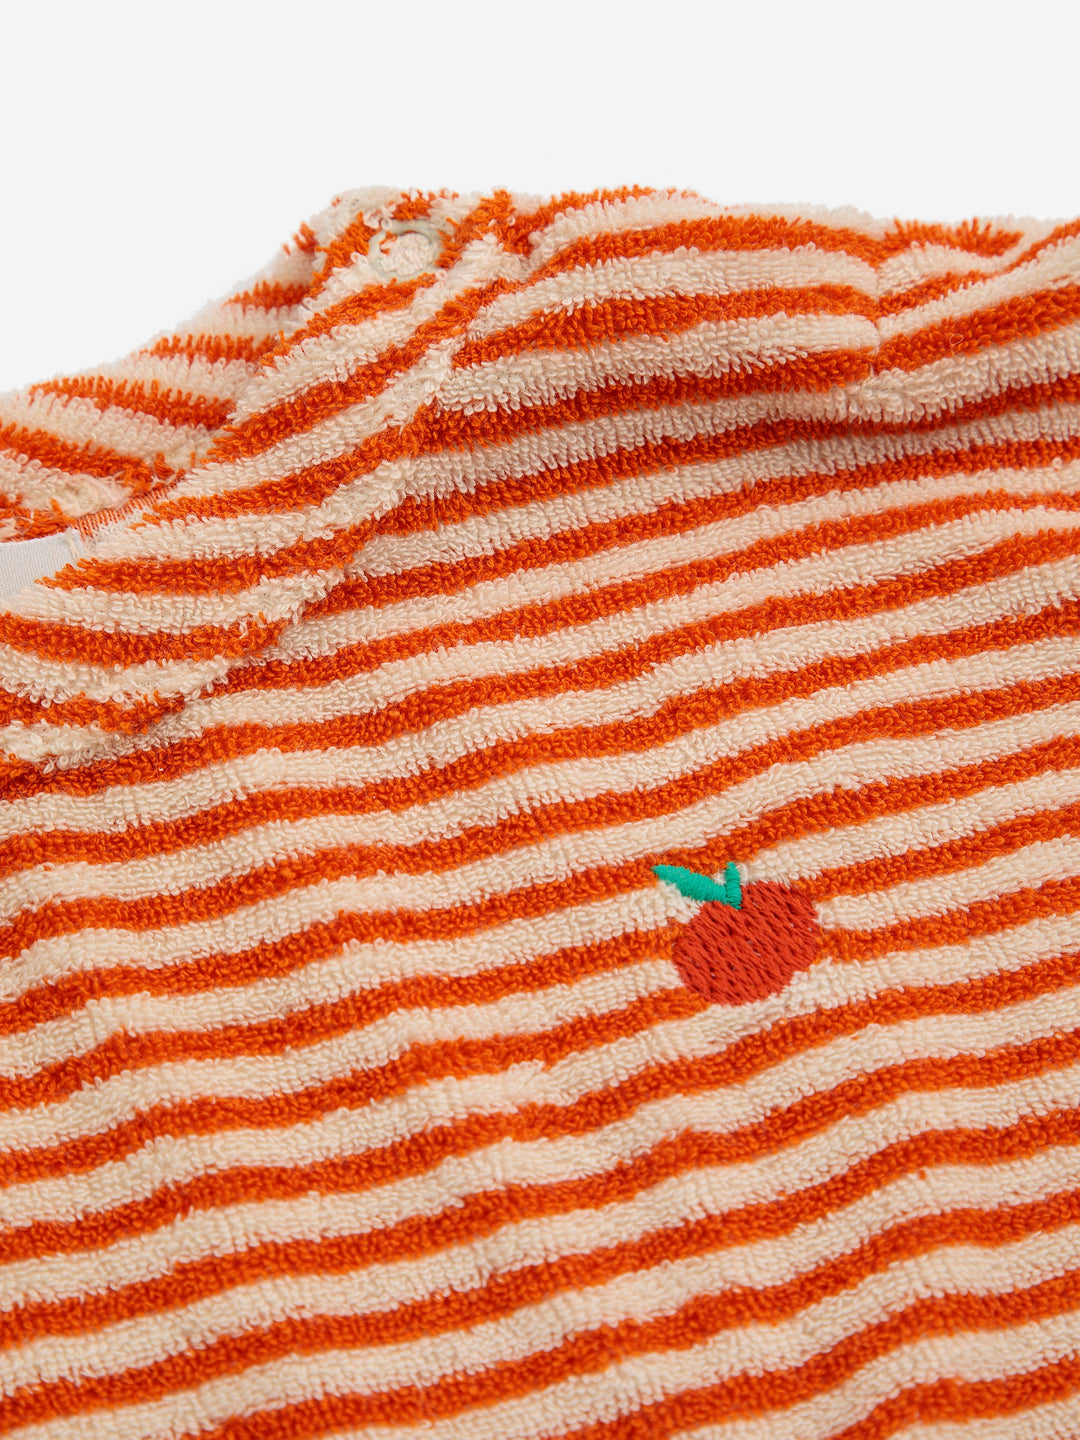 T-shirt Baby Stripes Terry Orange